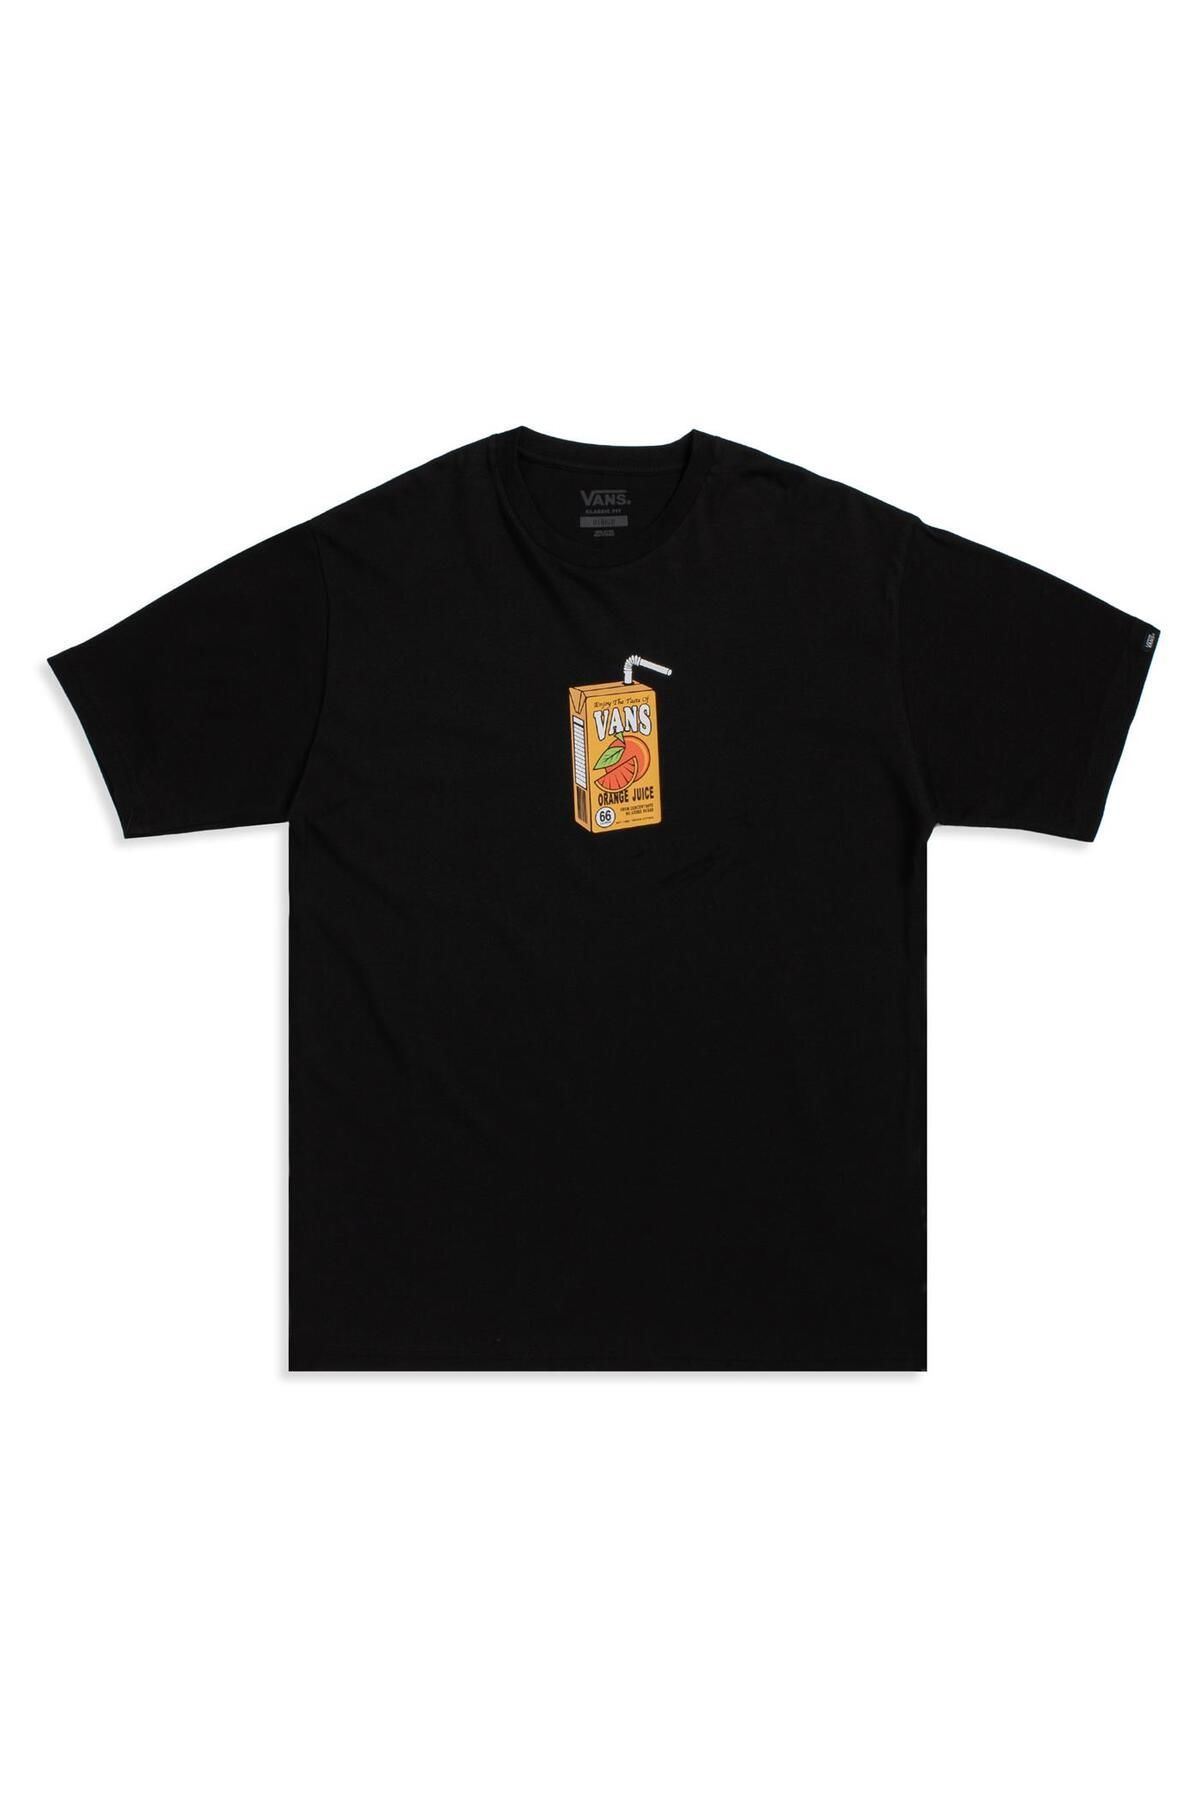 Juice Box T-Shirt